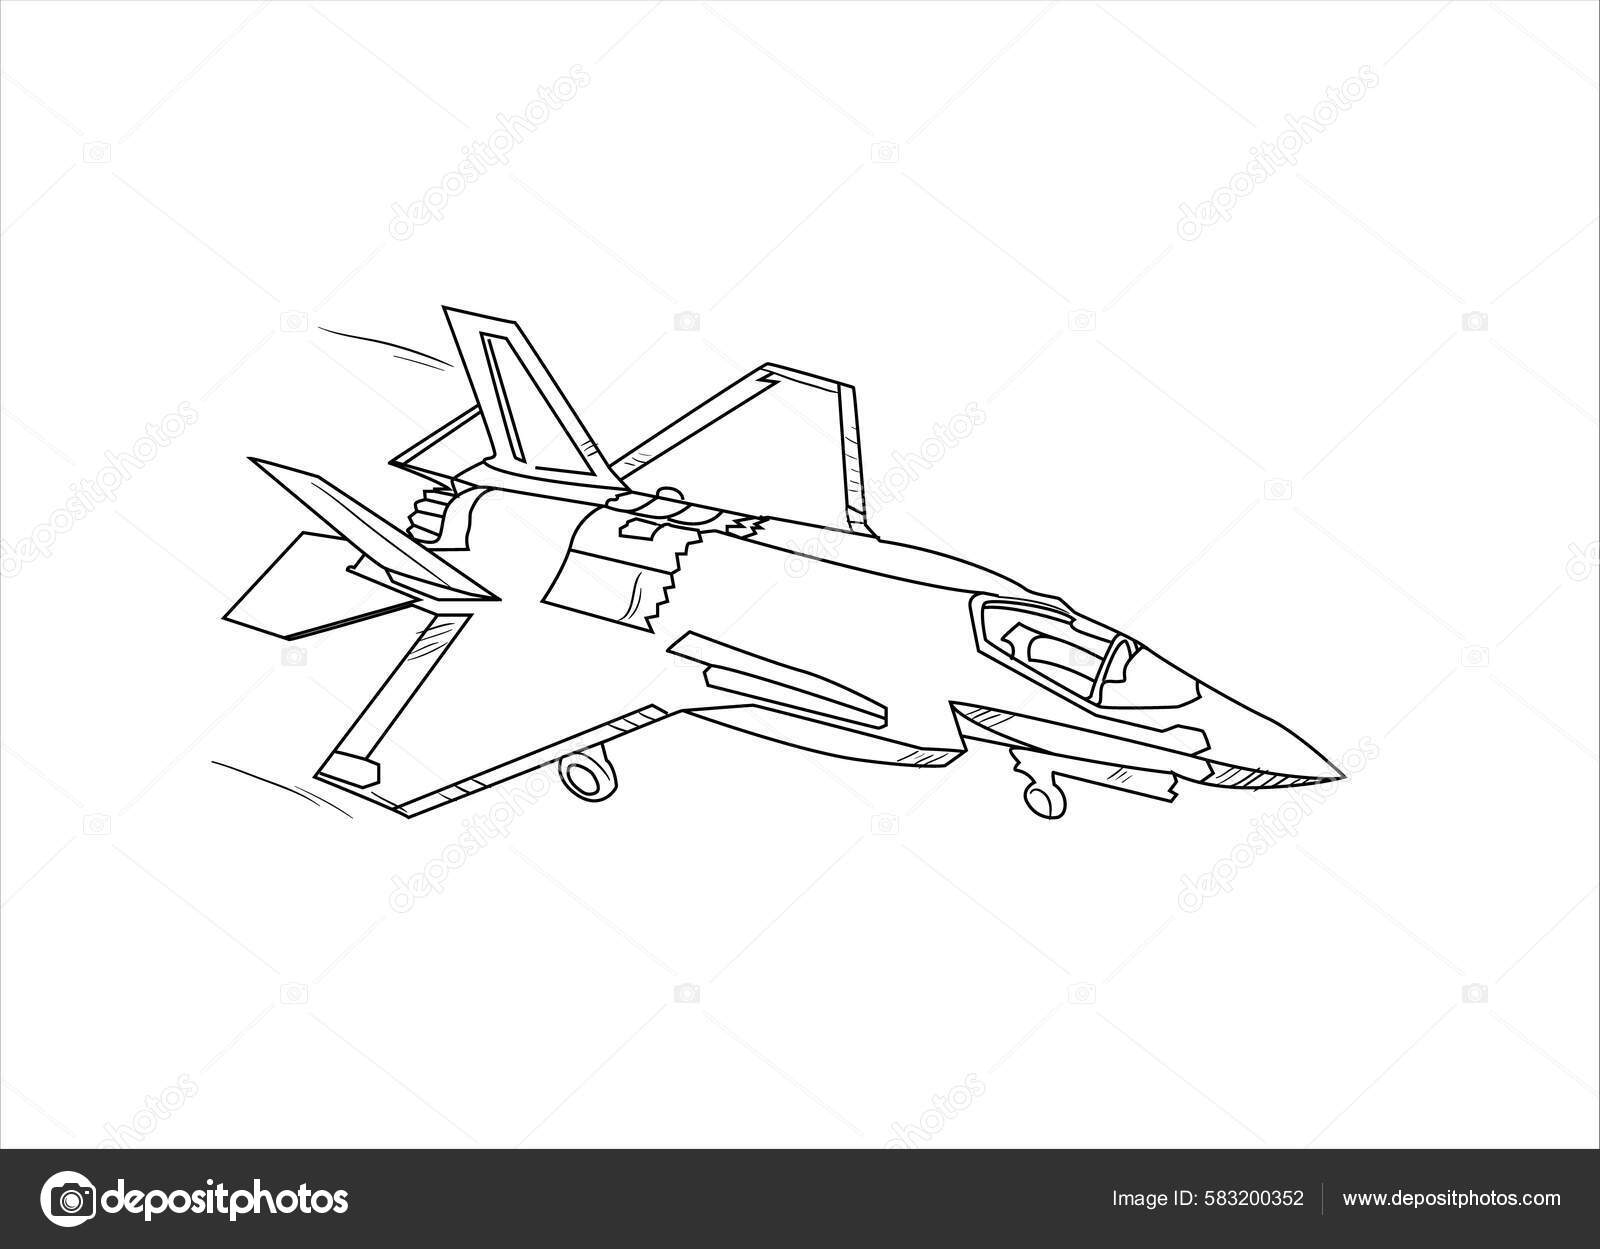 Aircraft drawing F-15 Eagle Ink artist Jerome Cadd top gun | eBay